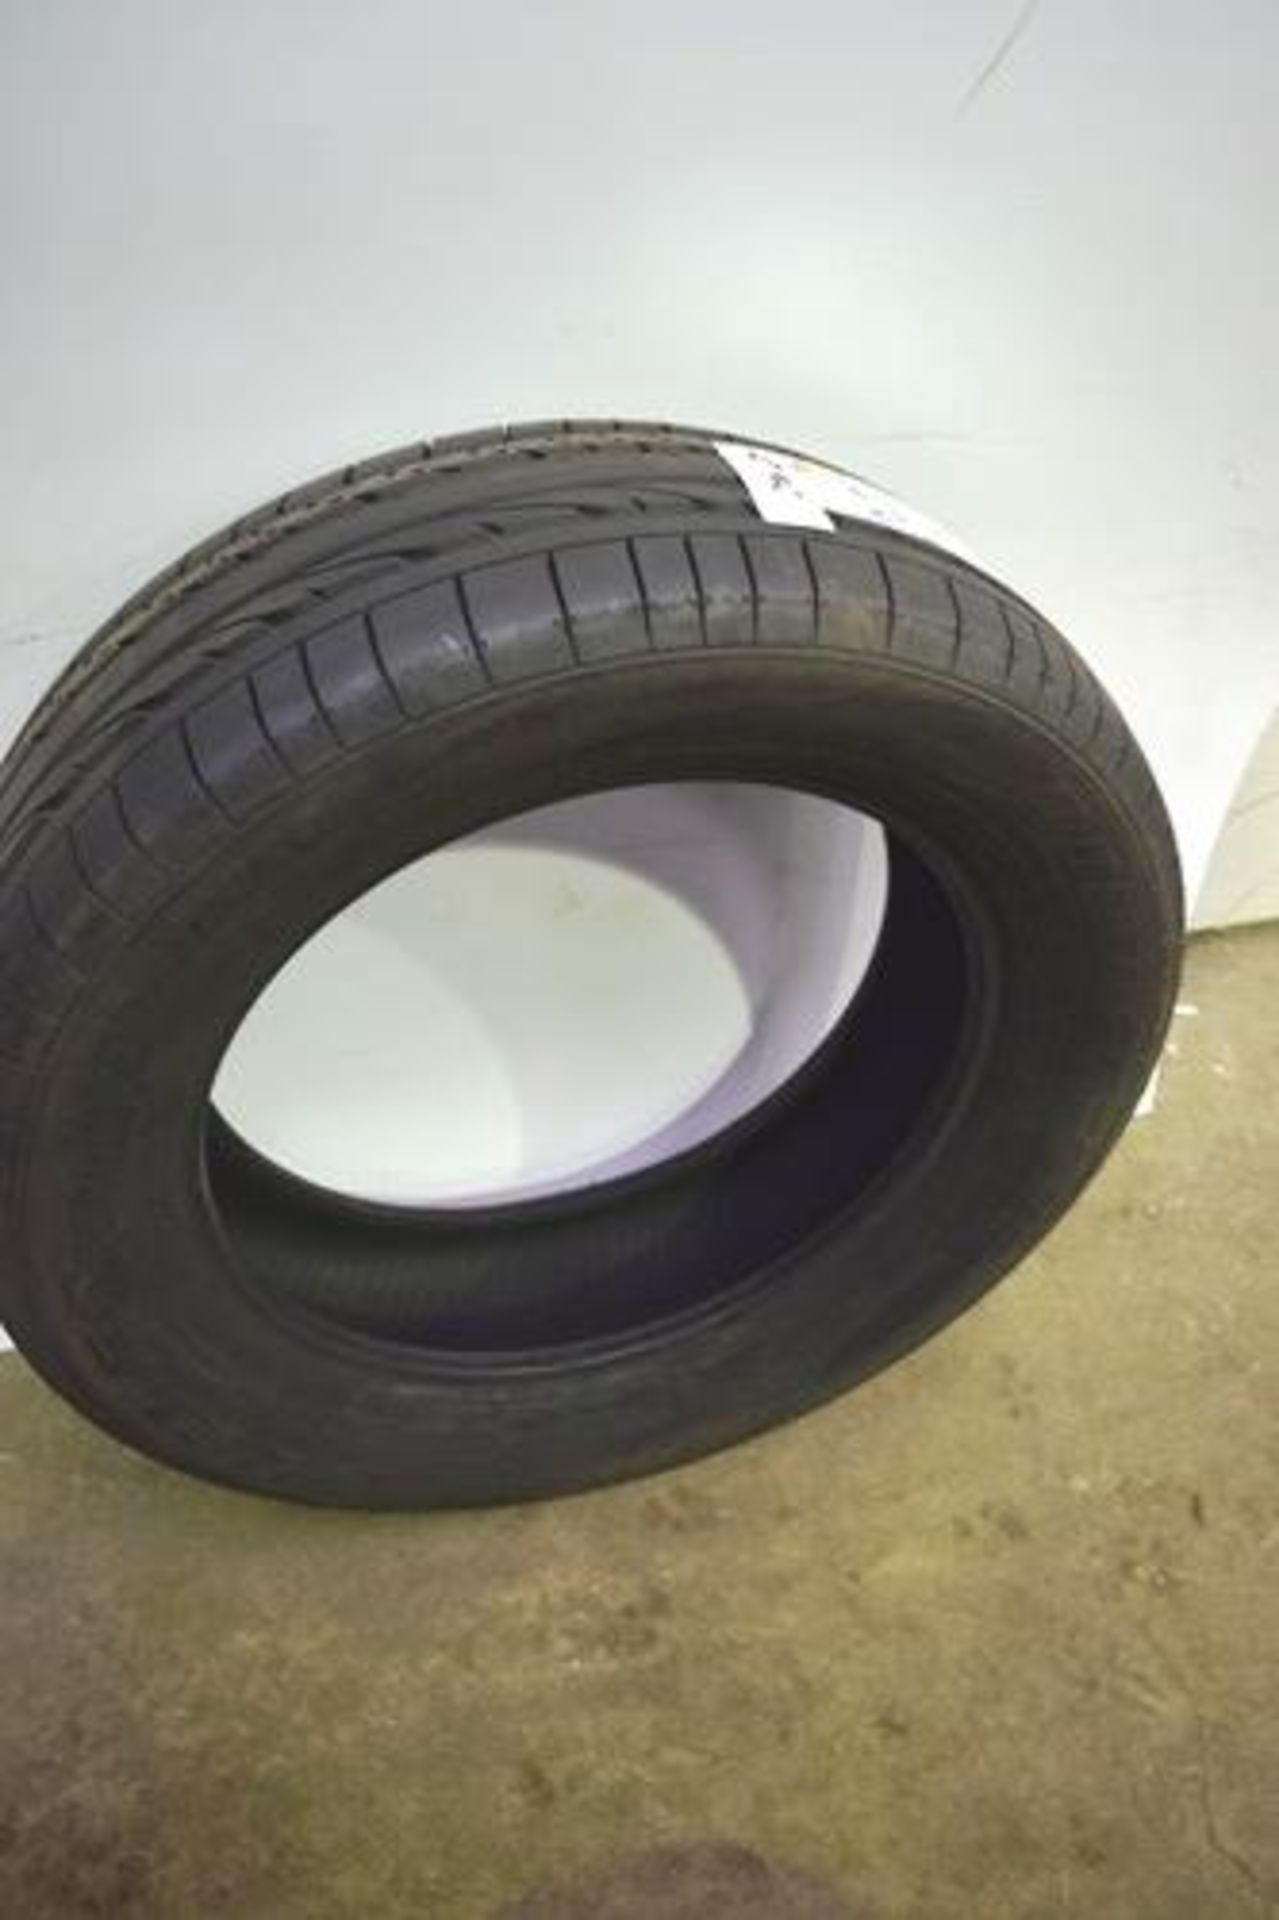 1 x Bridgestone Dueler H/P Sport tyre, size 255/55R19 111H XL - New with label (GS1) - Image 2 of 2